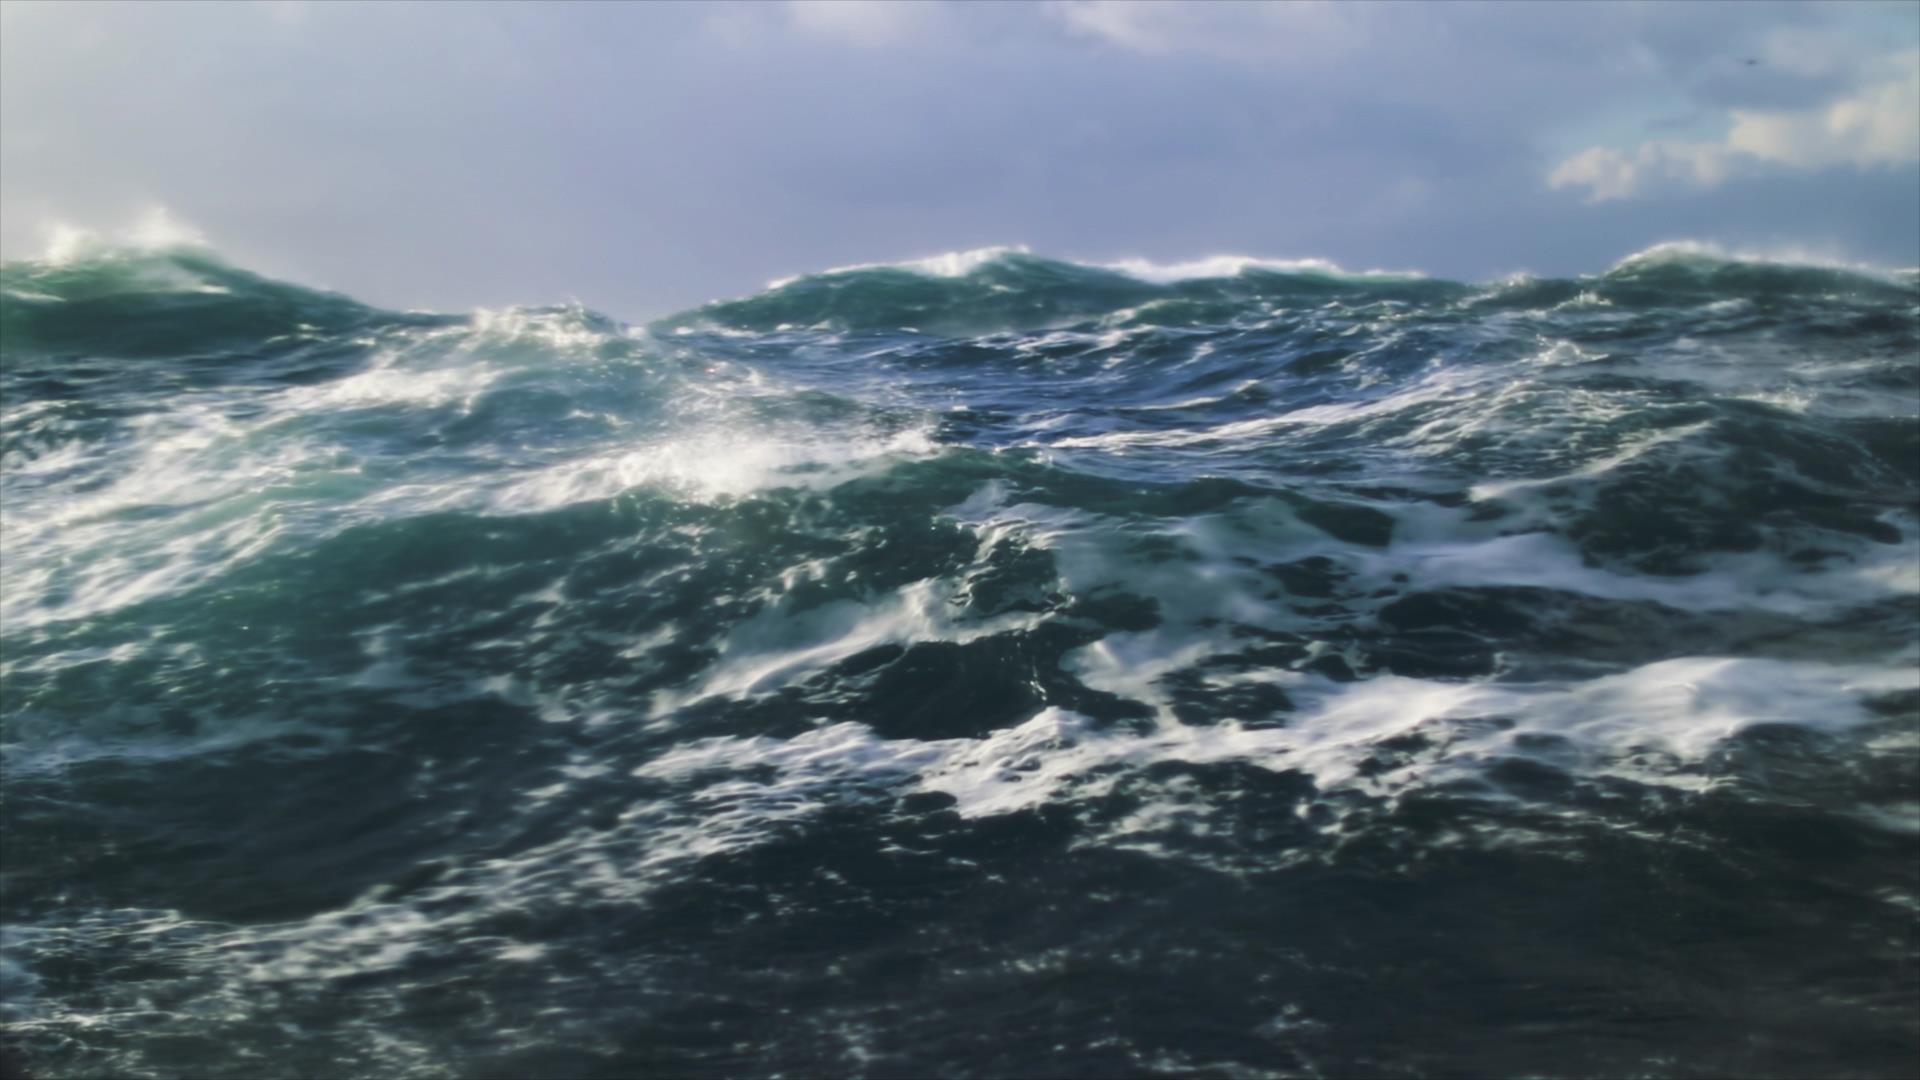 New studies suggest Atlantic Ocean currents are slowing